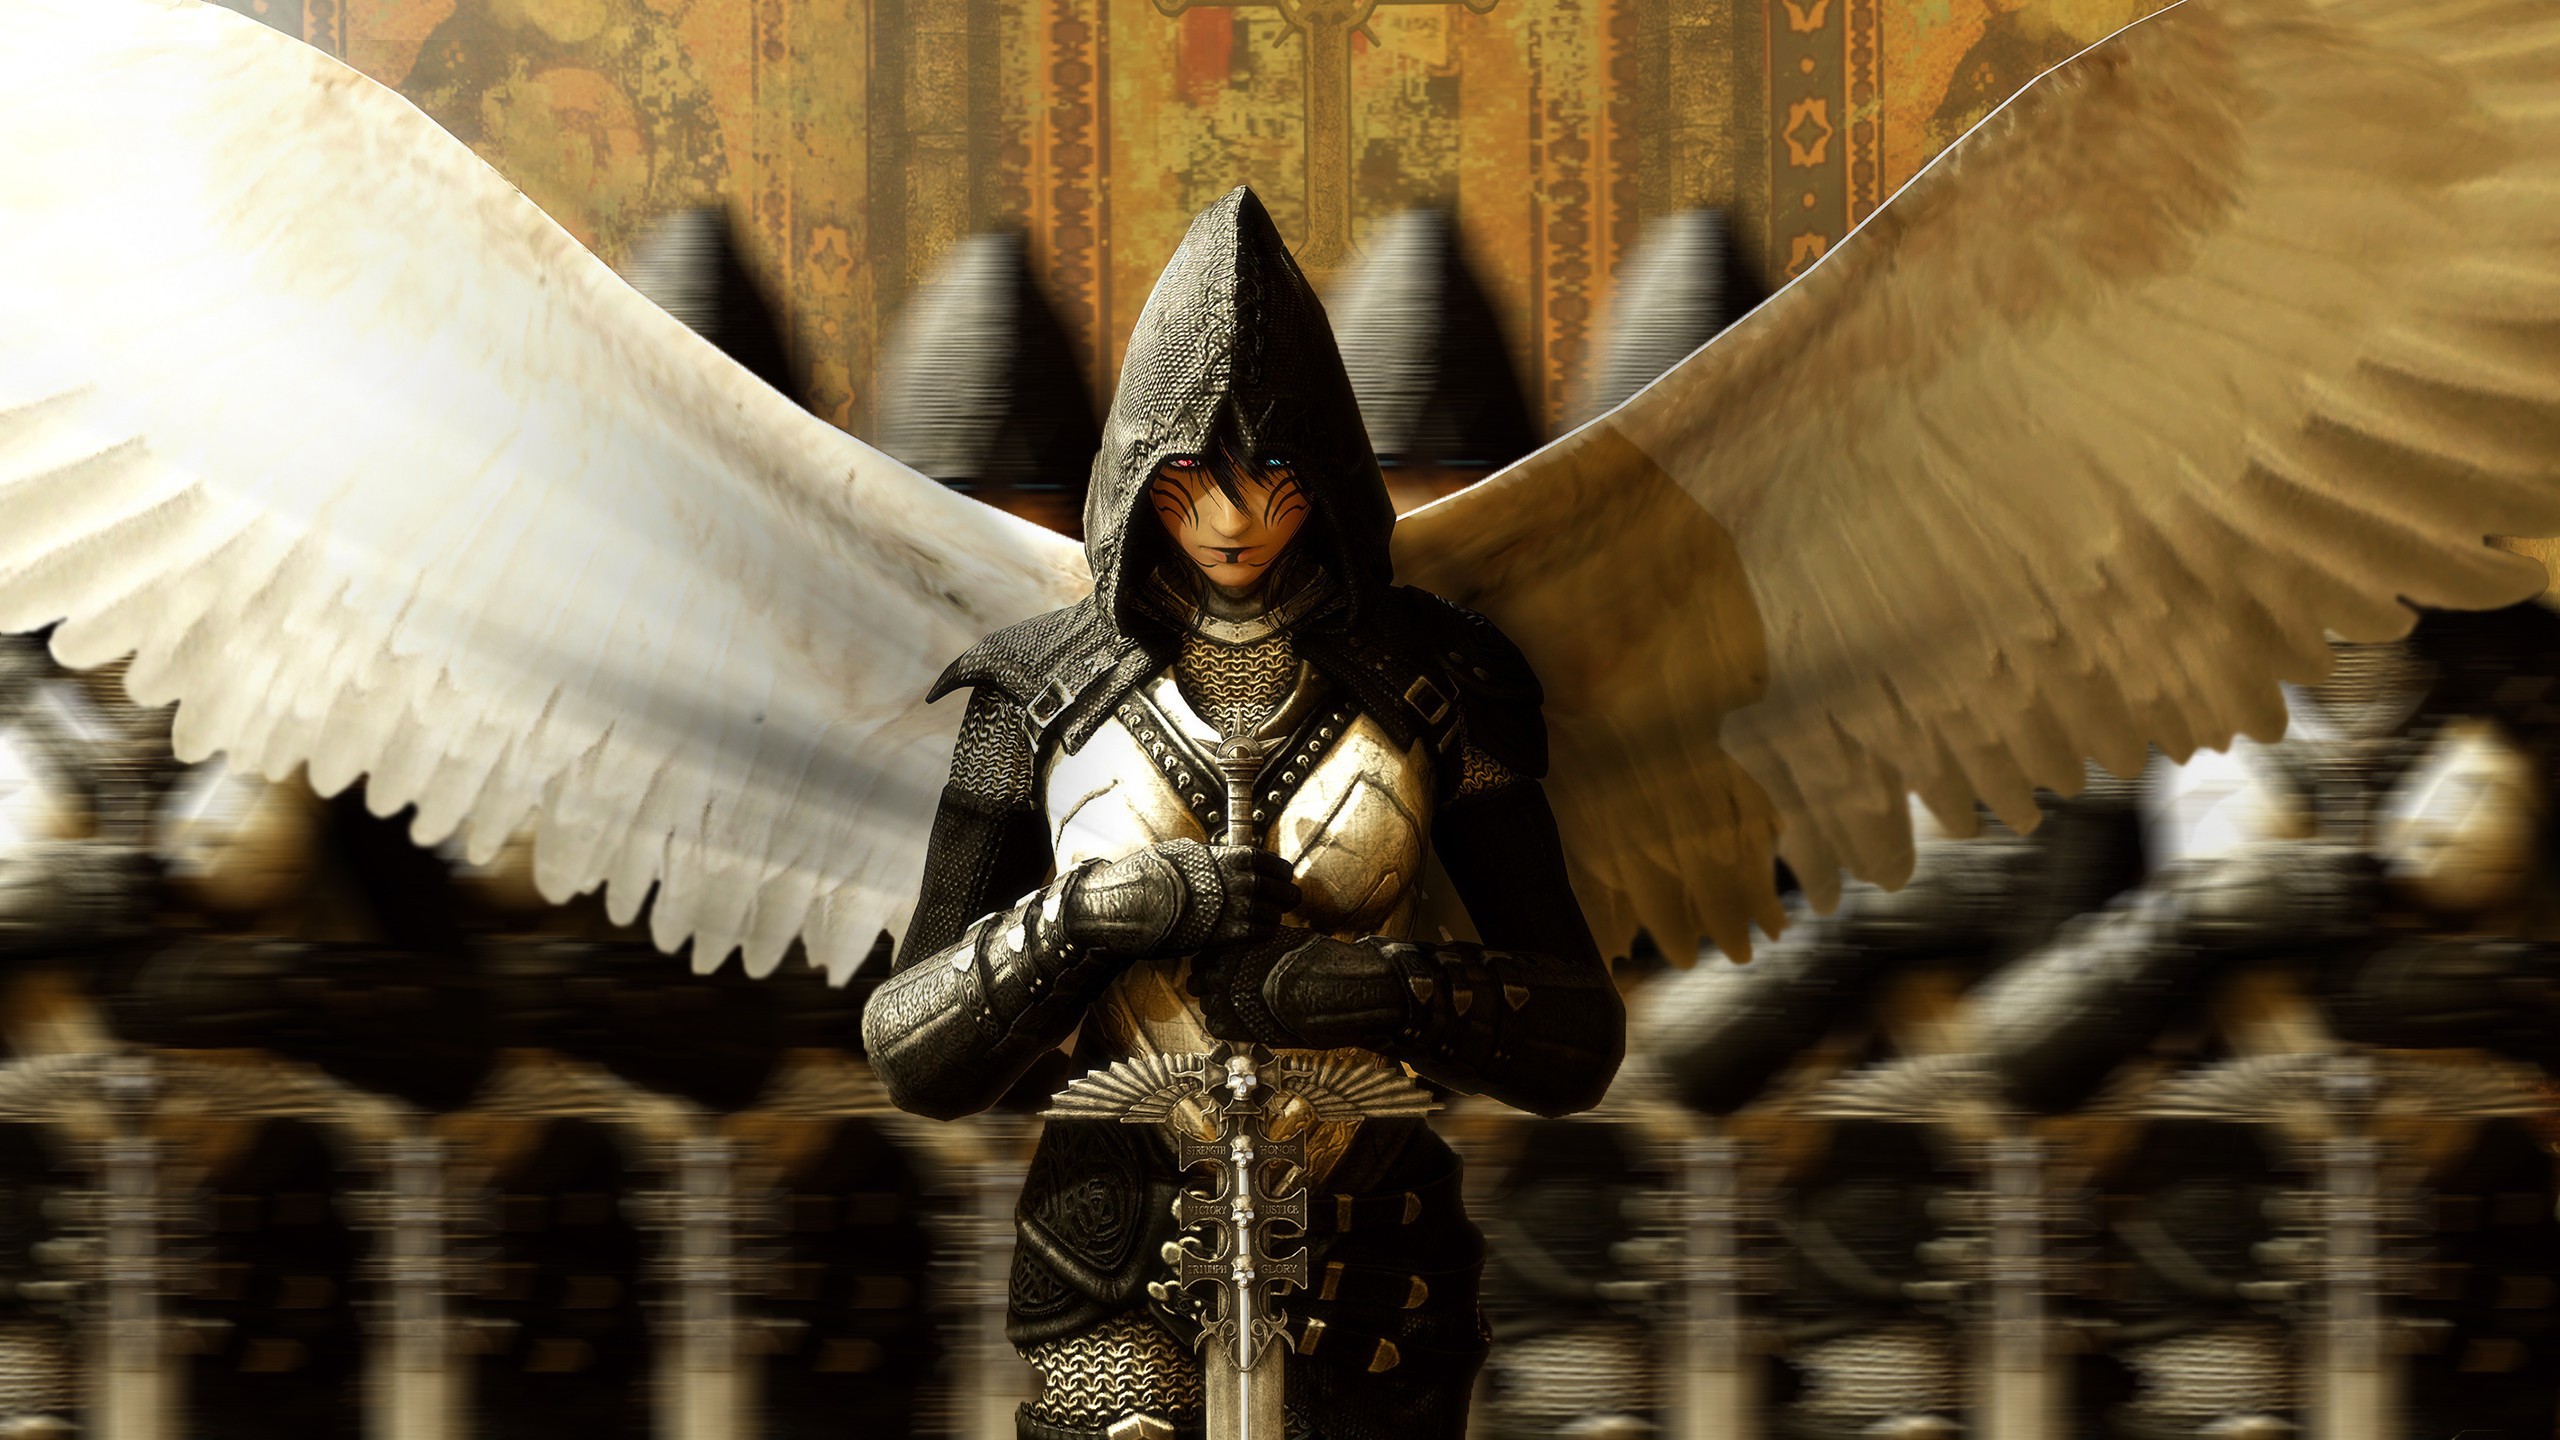 General 2560x1440 angel fantasy art fantasy girl wings women hoods sword women with swords weapon heterochromia digital art